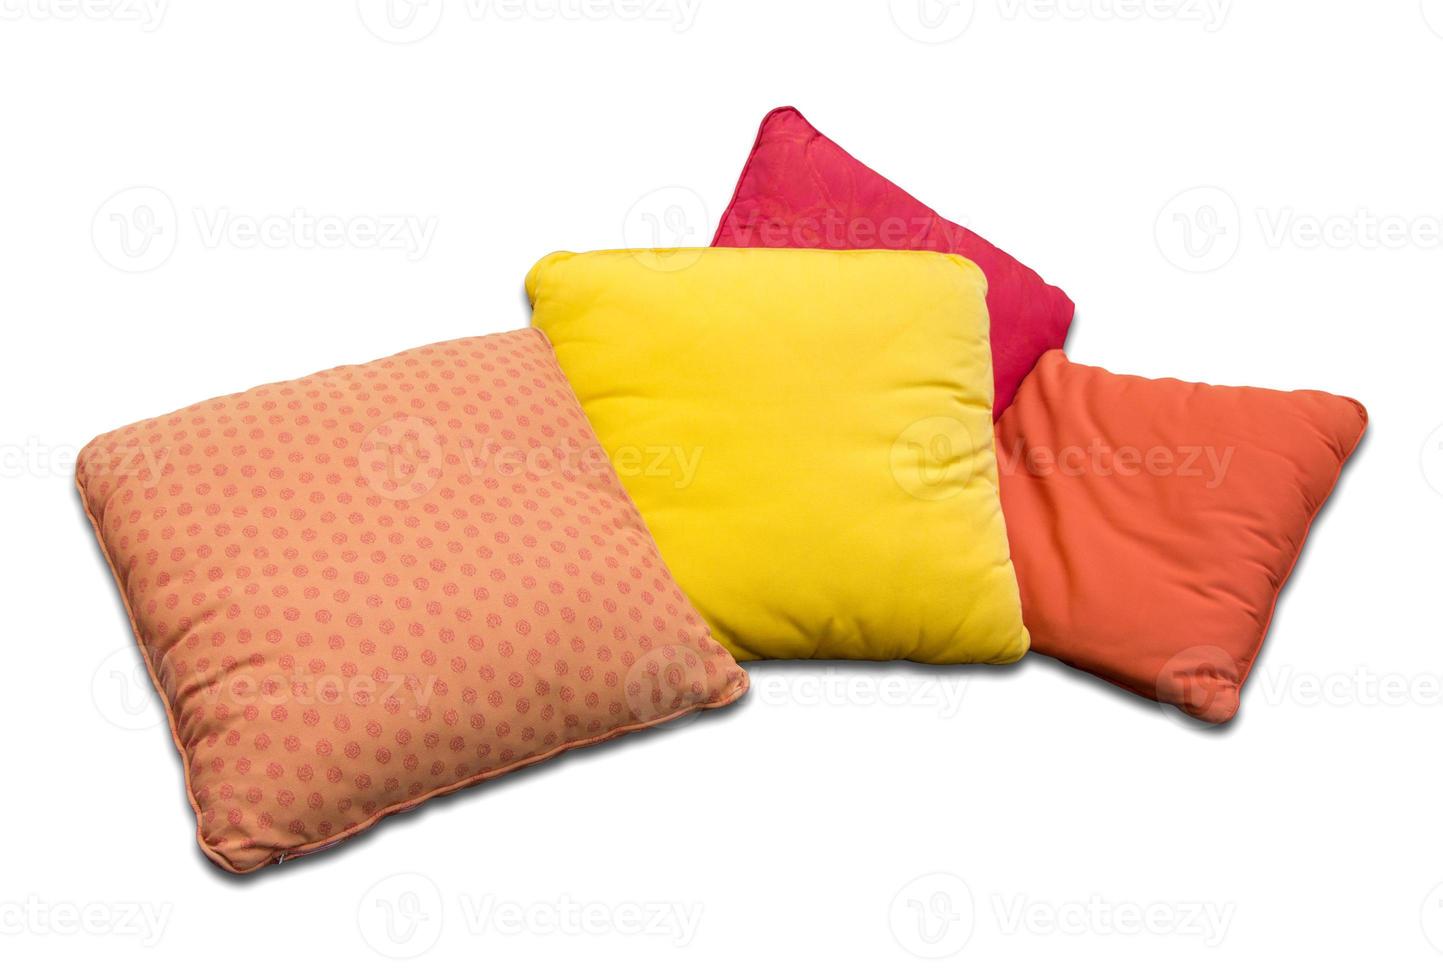 almofadas coloridas isoladas no fundo branco foto